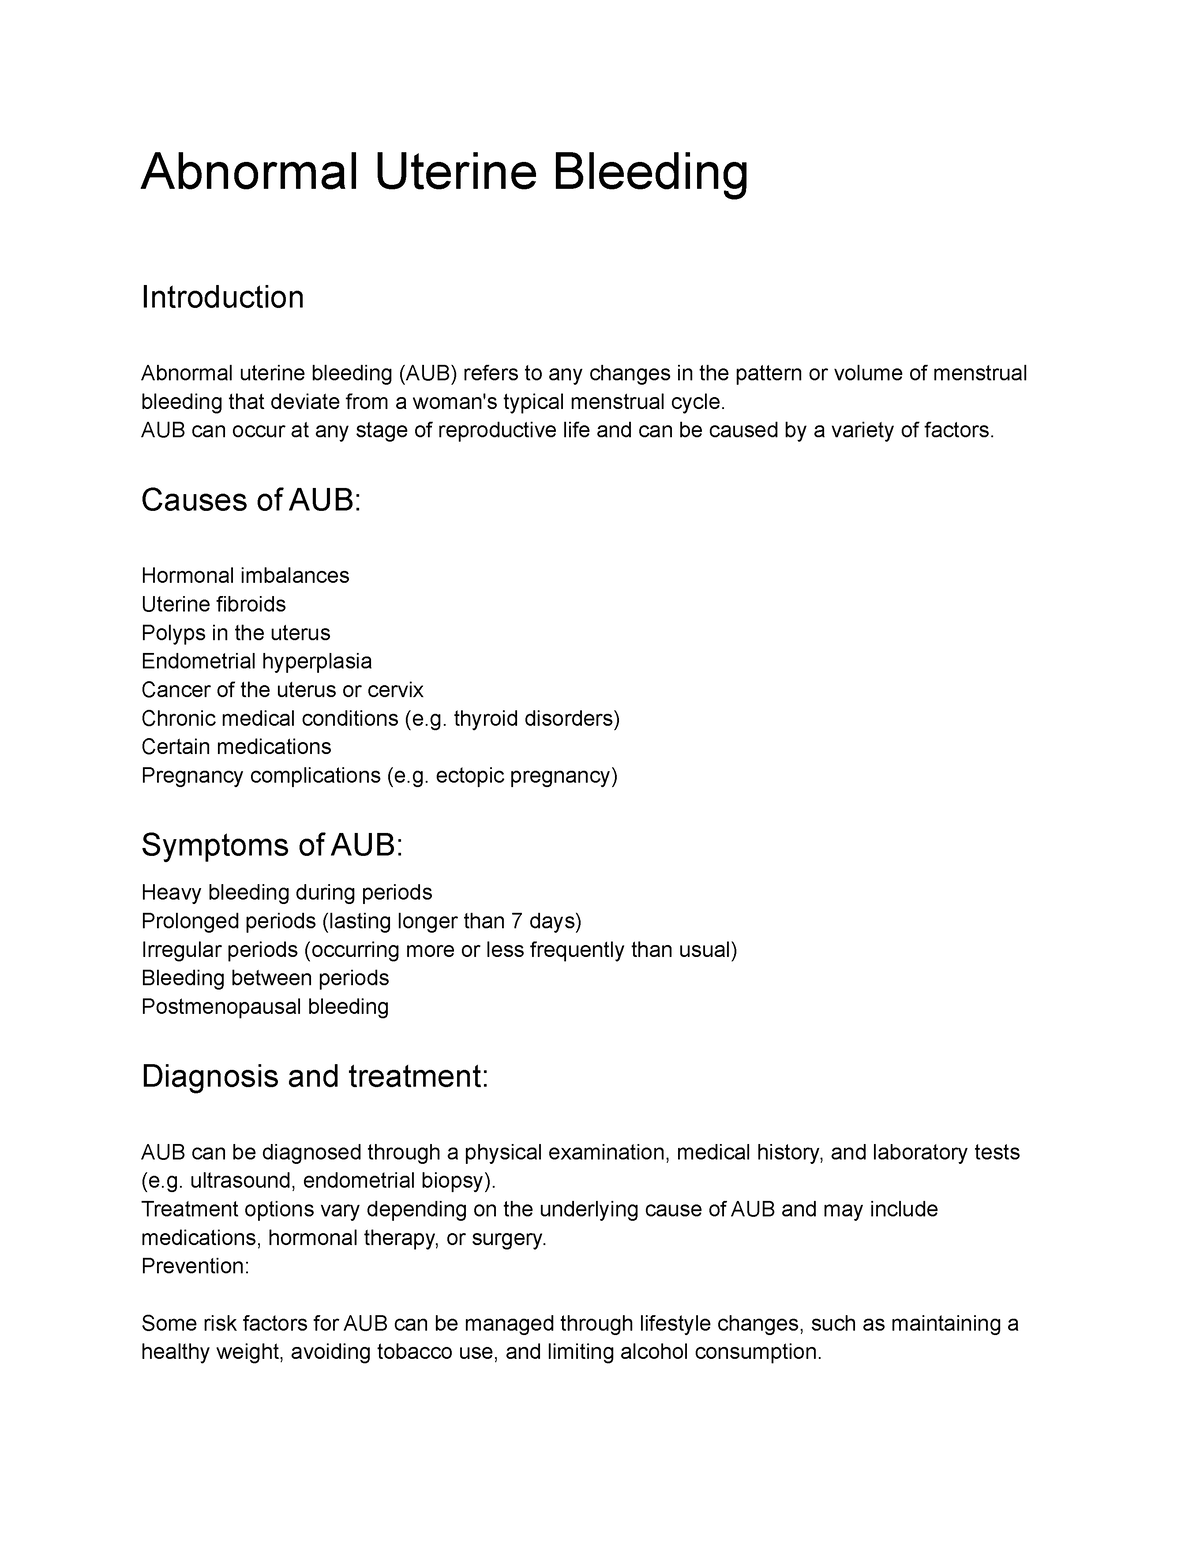 Abnormal Uterine Bleeding: Causes, Diagnosis & Treatment